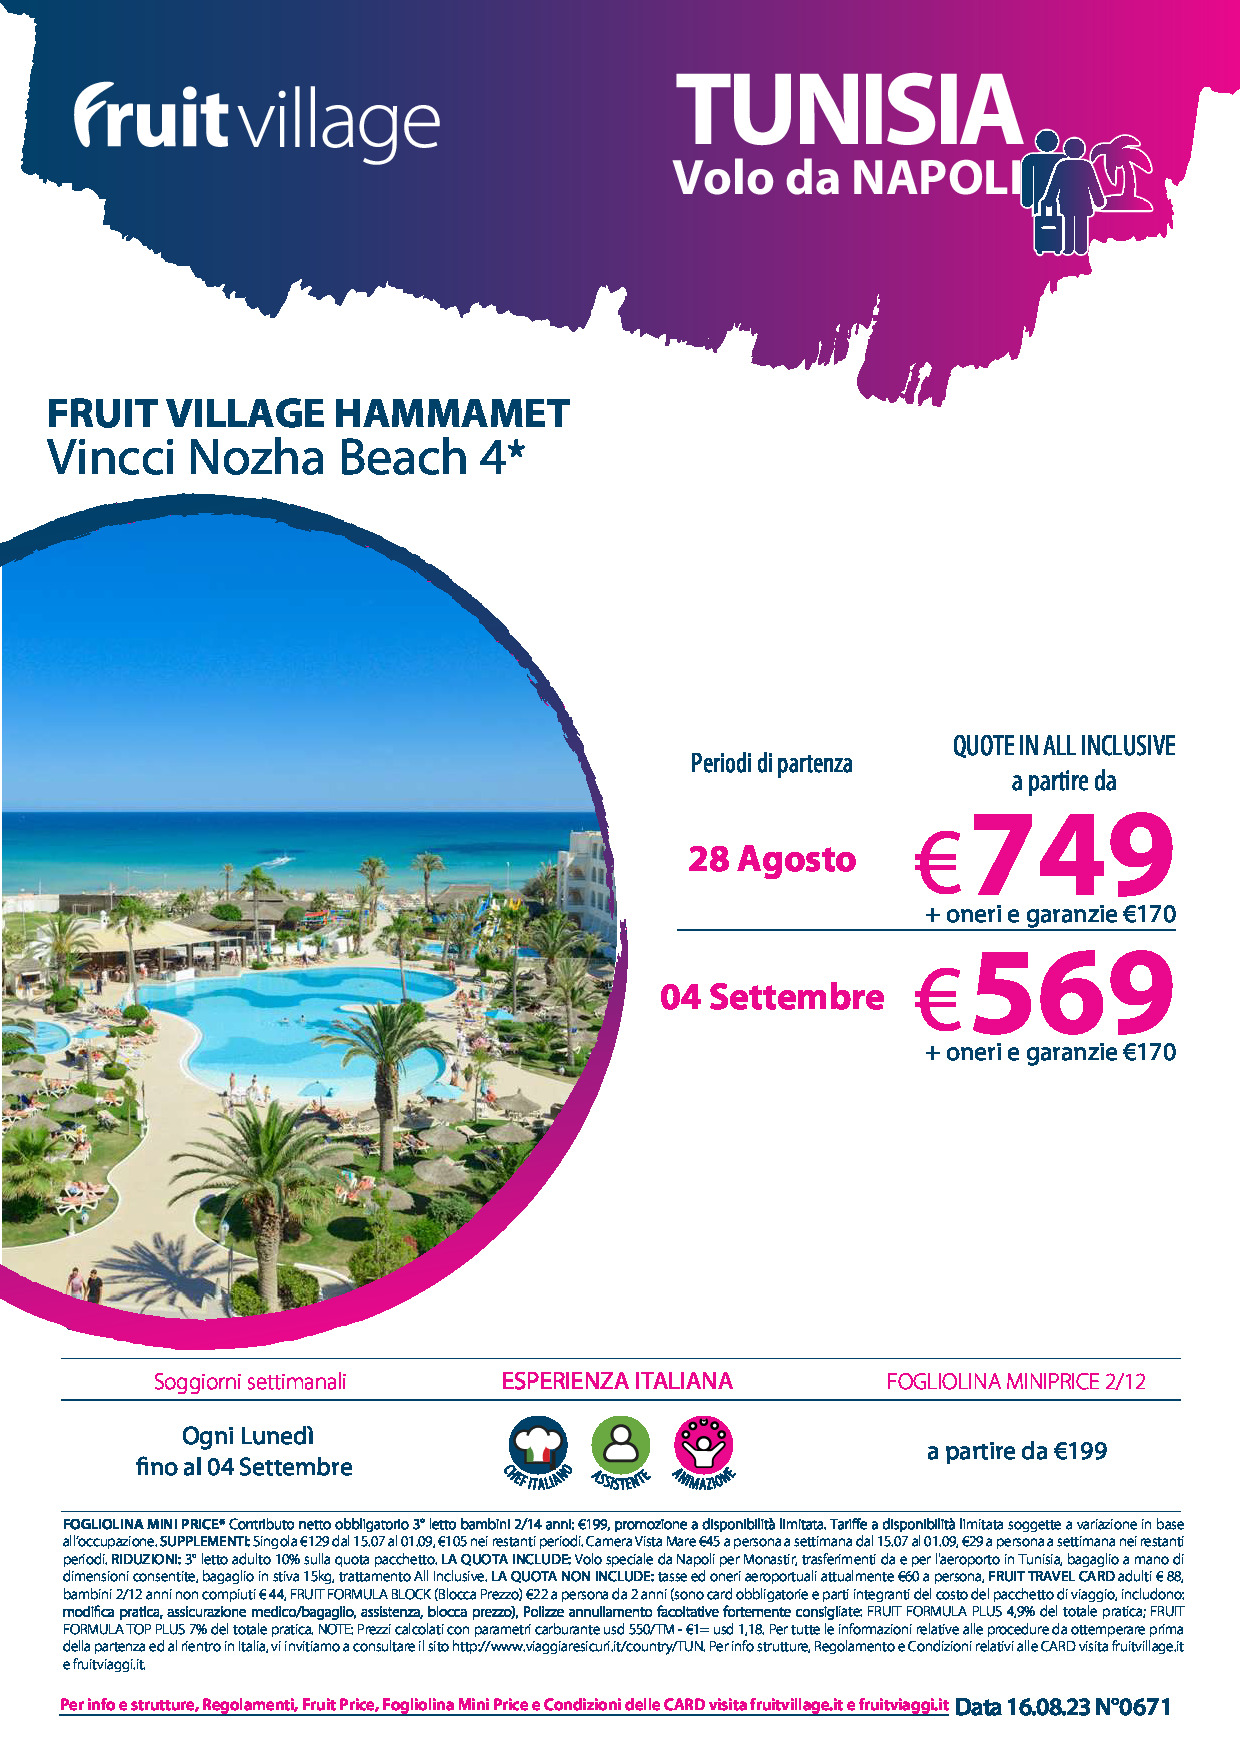 FRUIT VILLAGE Hammamet Vincci Nozha Beach con volo speciale da Napoli